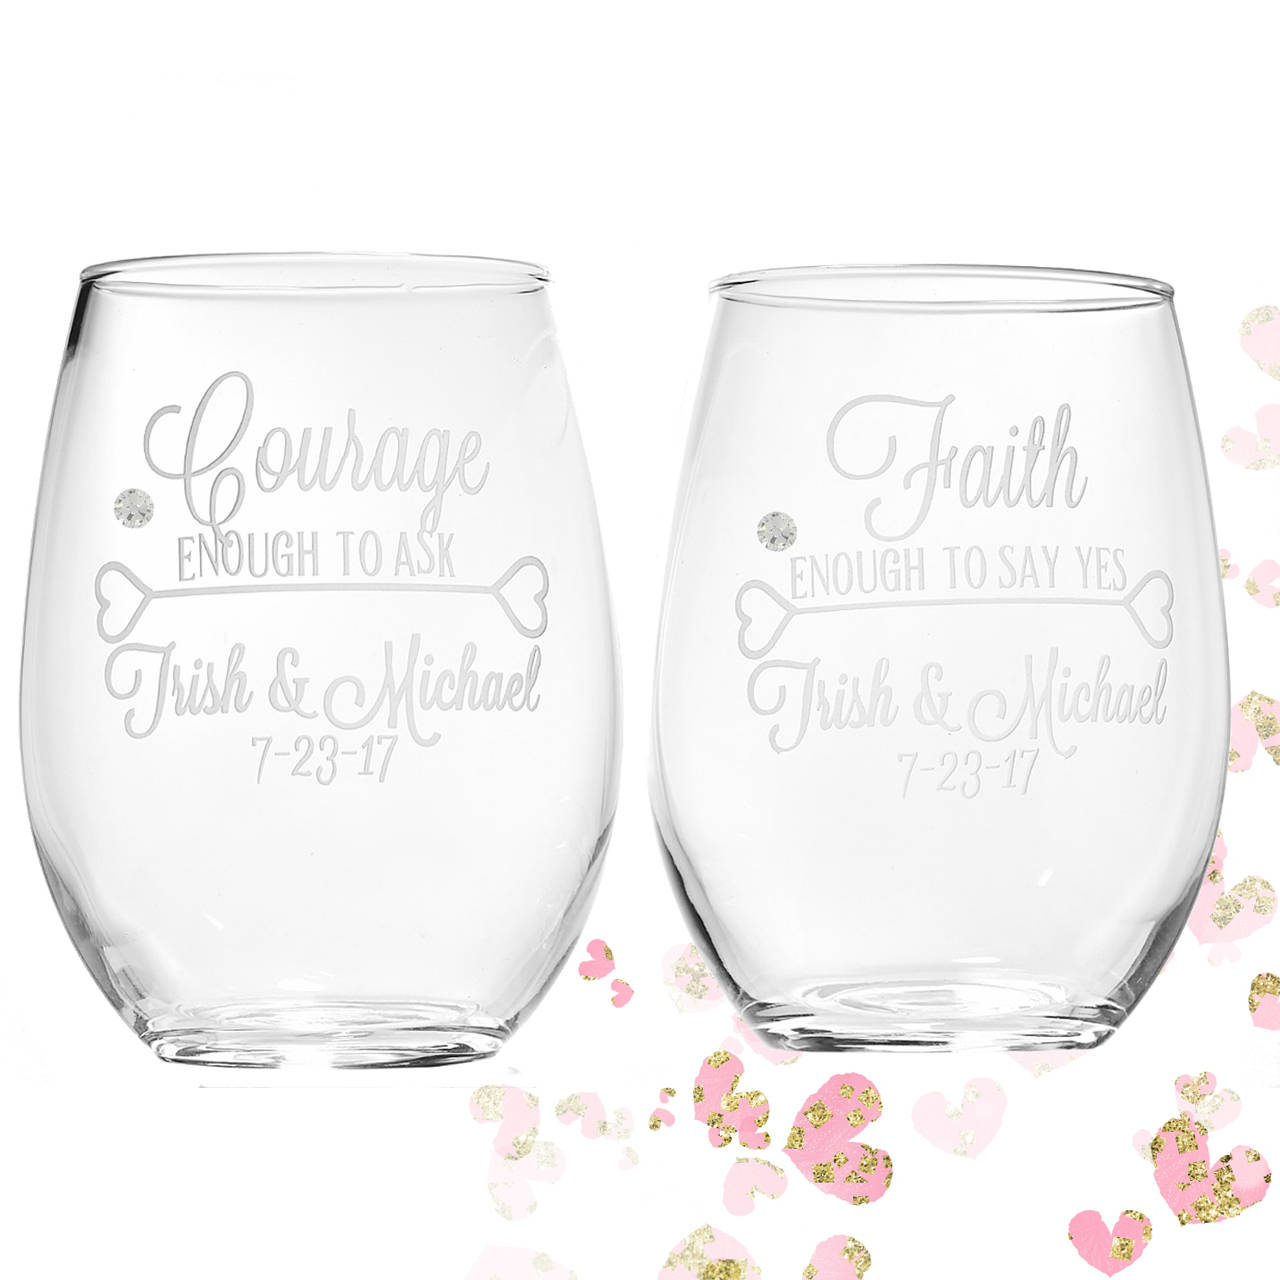 Unique Wedding Couple Gift | Courage Faith Wedding Gift | Wedding Stemless Glasses | Personalized Wedding Gift | Custom Gift Bride Groom